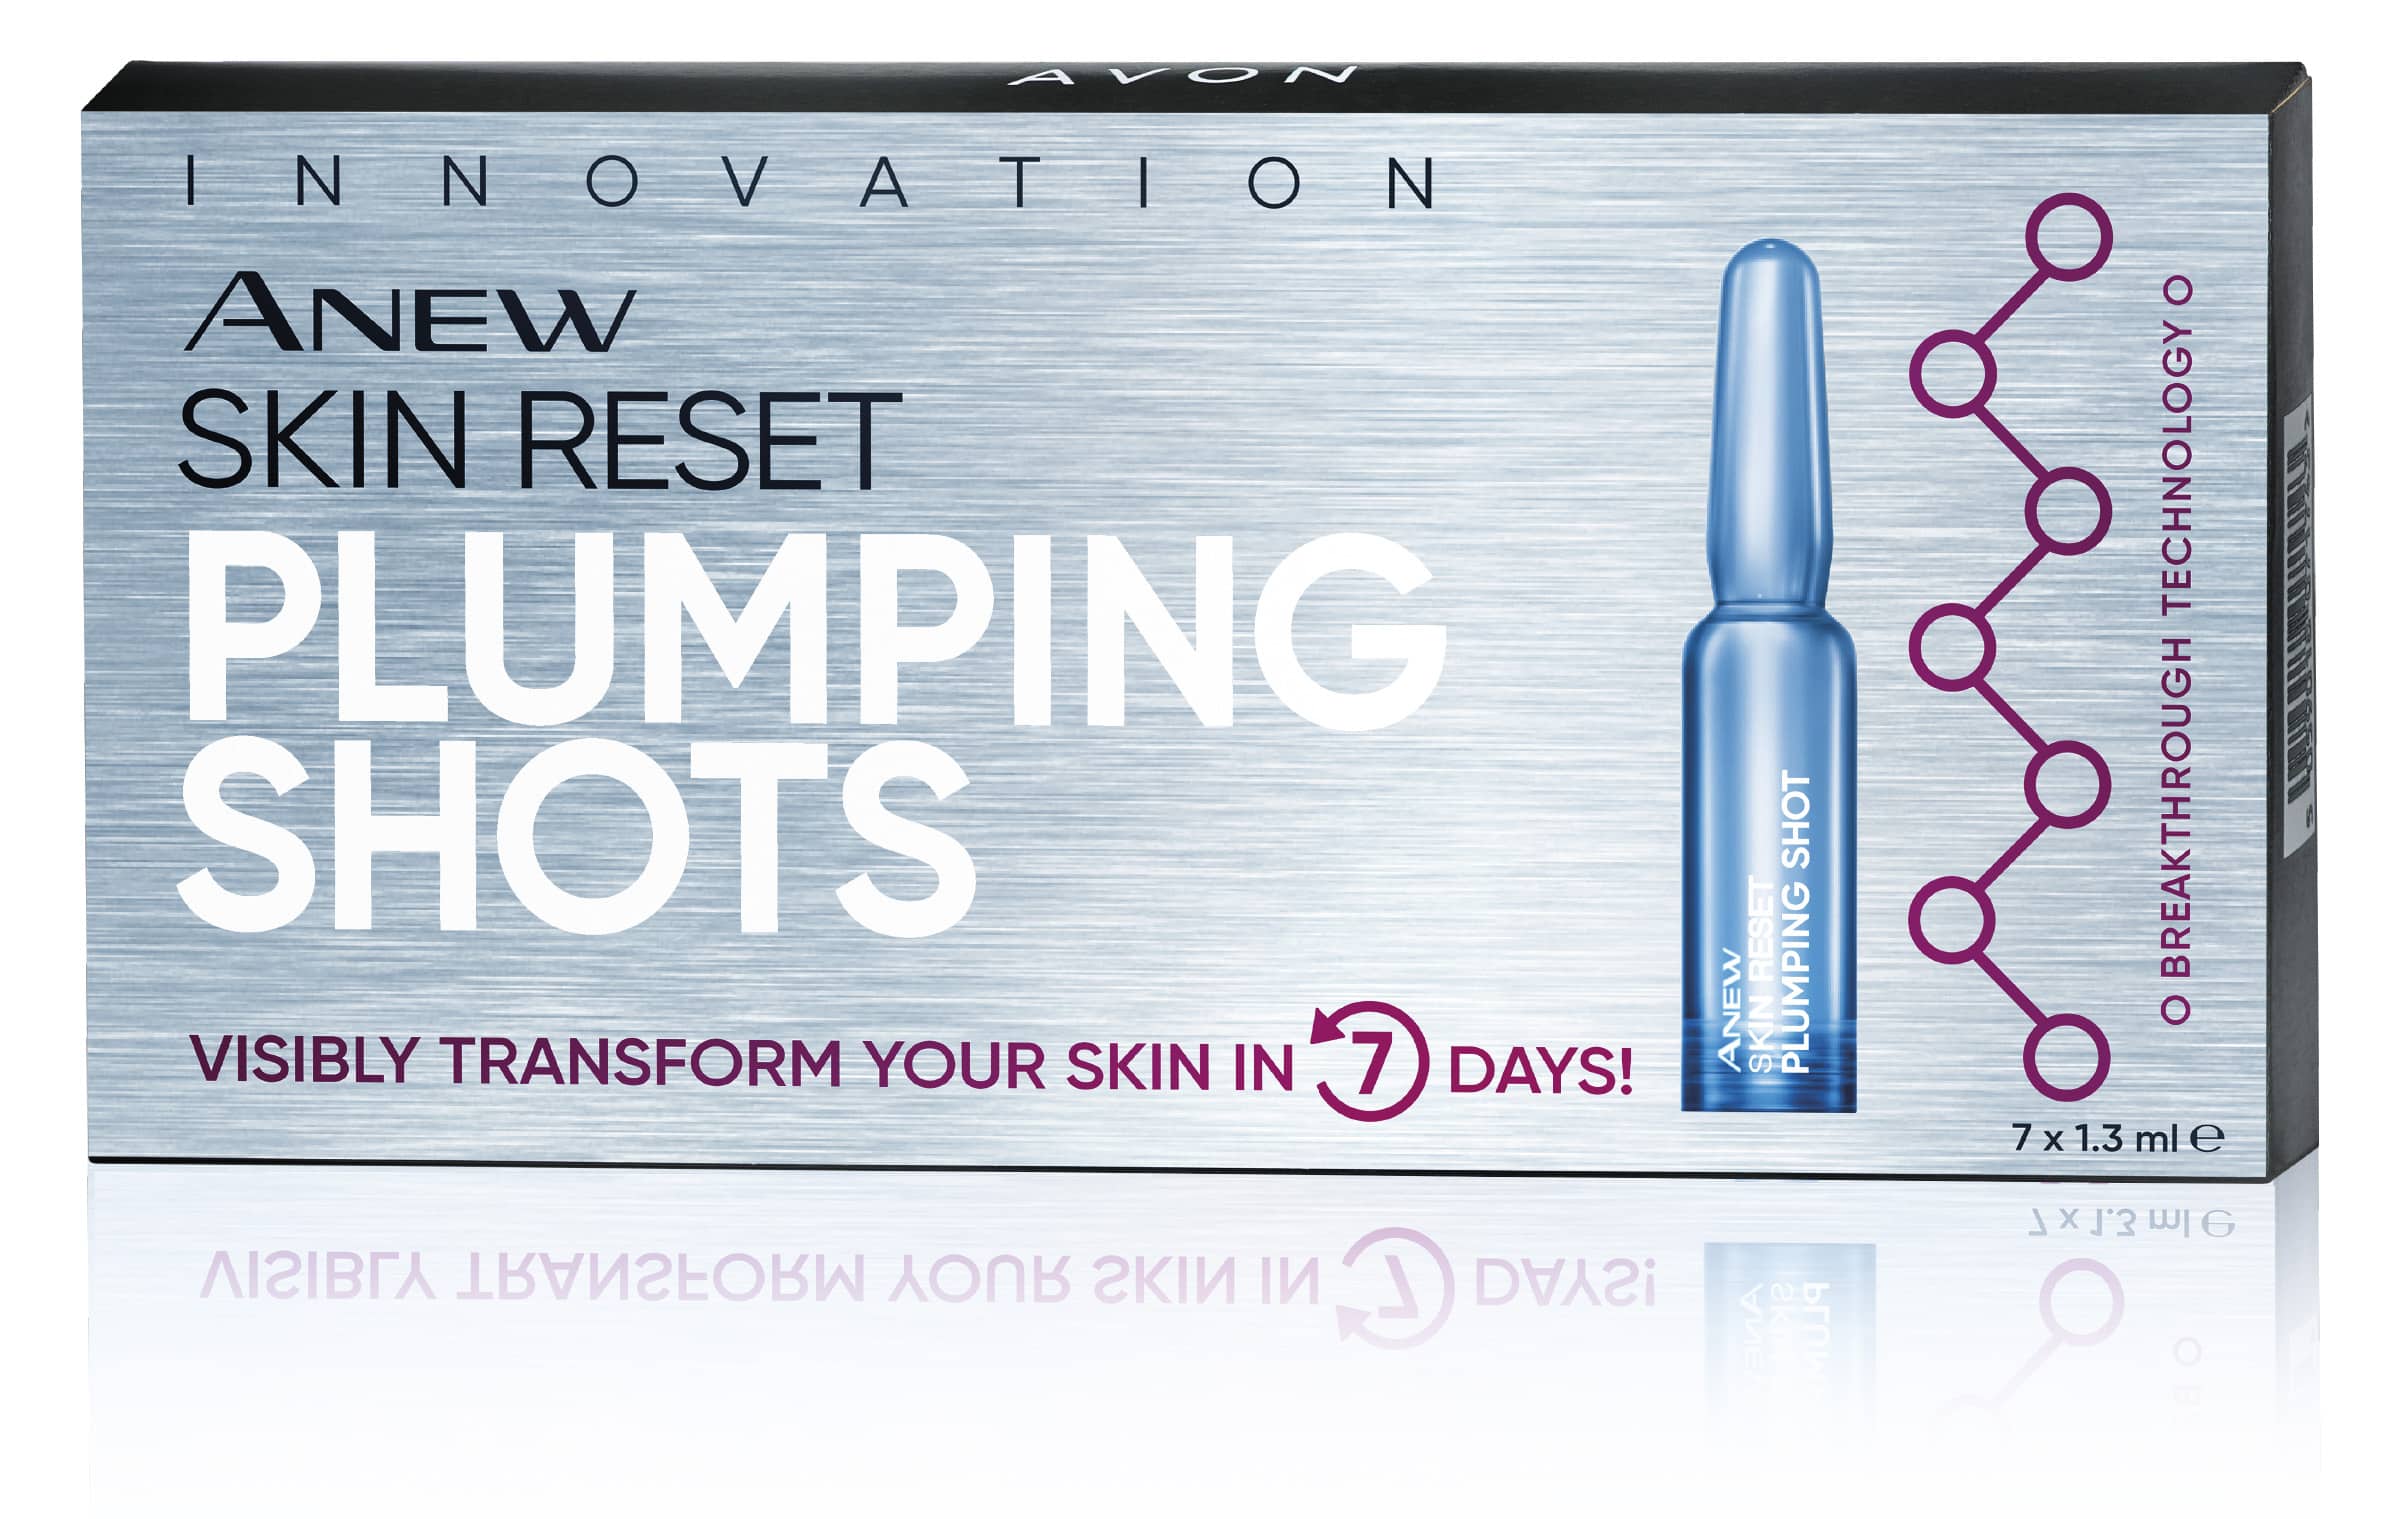 Anew Skin Reset Plumping Shots